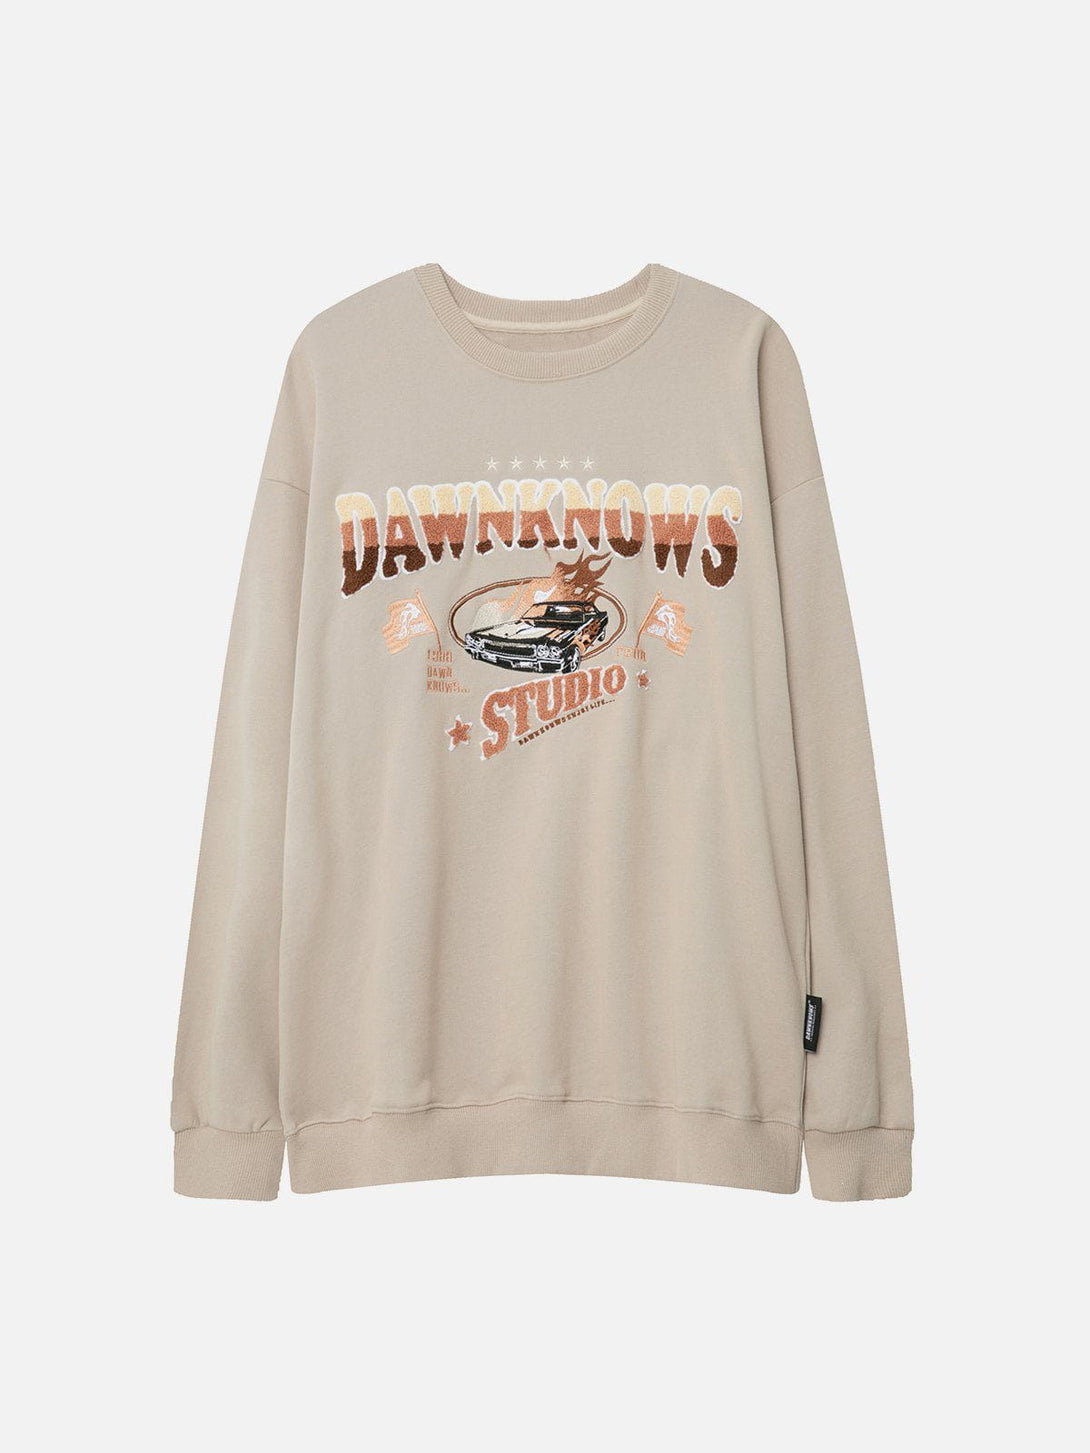 Majesda® - Gradient Letter Embroidery Sweatshirt outfit ideas streetwear fashion